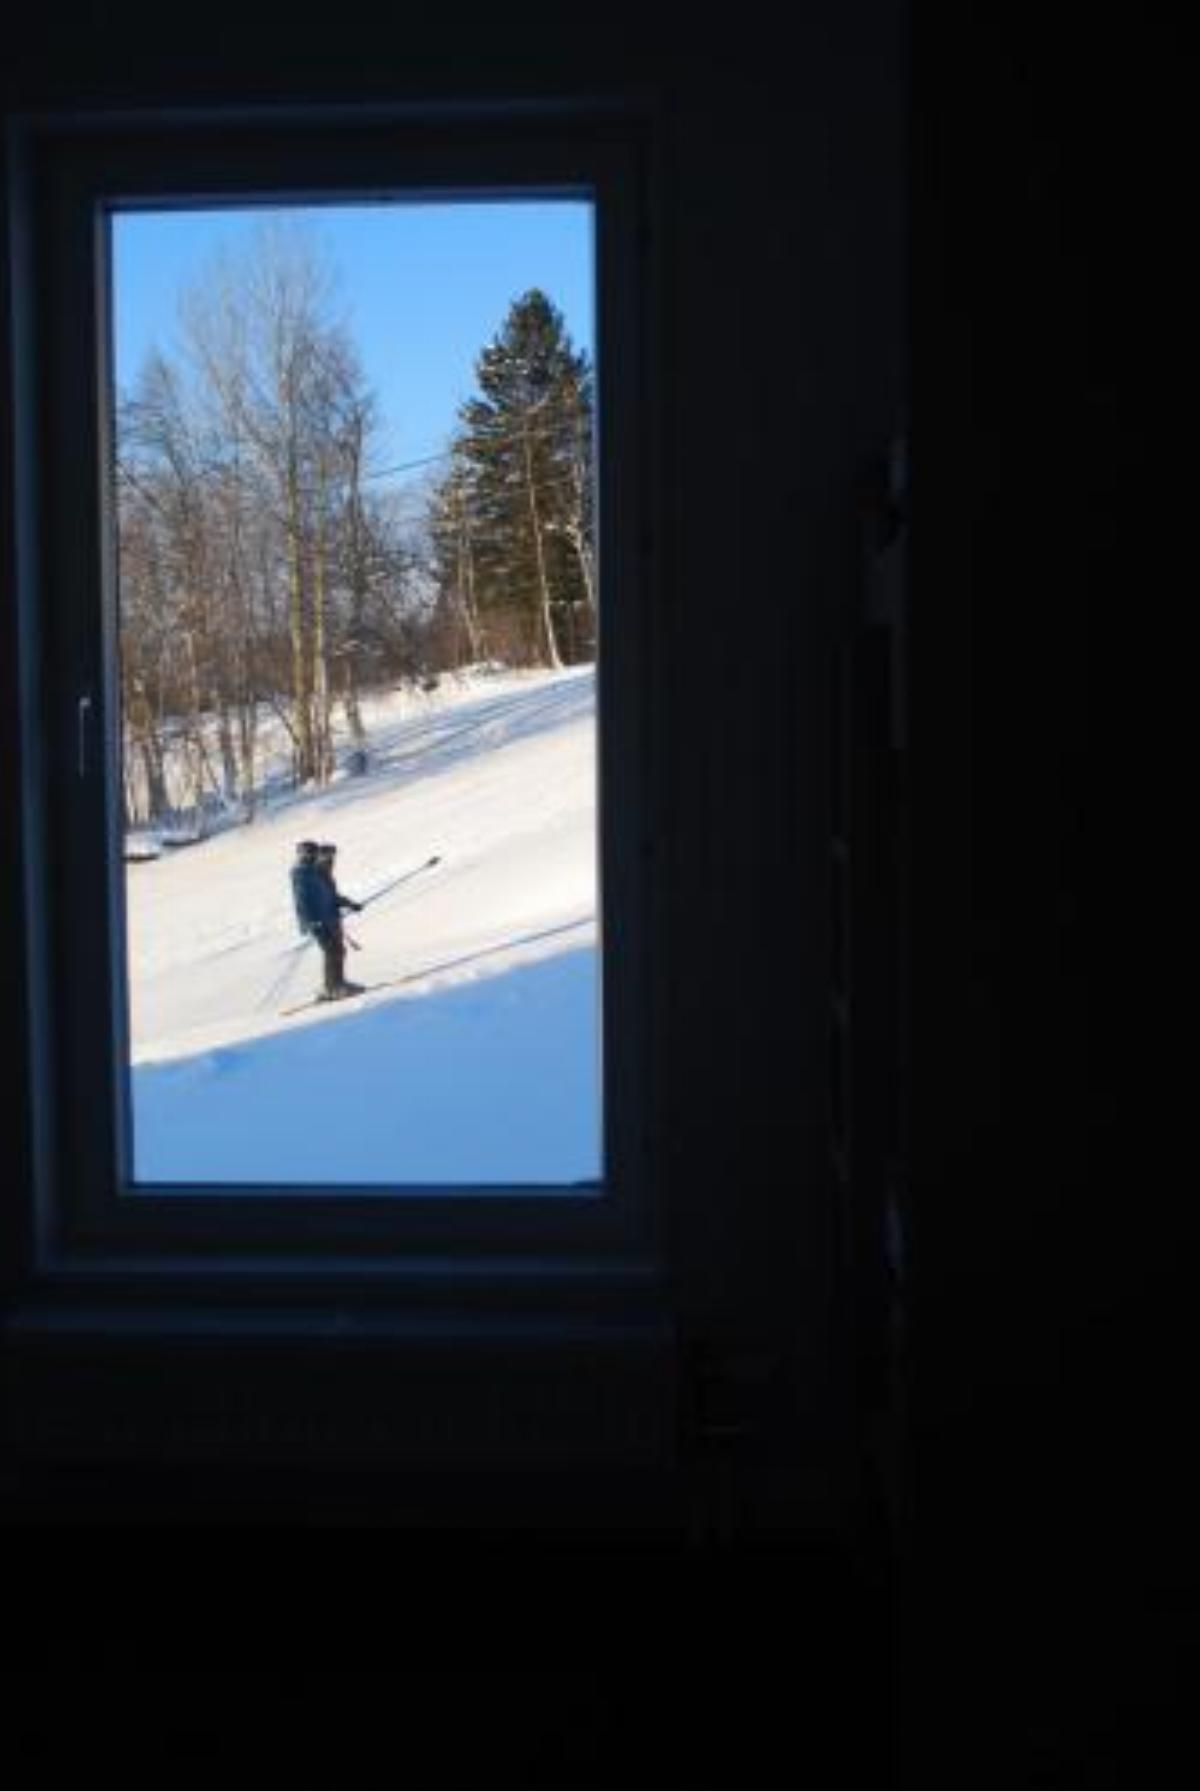 Funäs Ski Lodge – House A & C Hotel Funäsdalen Sweden